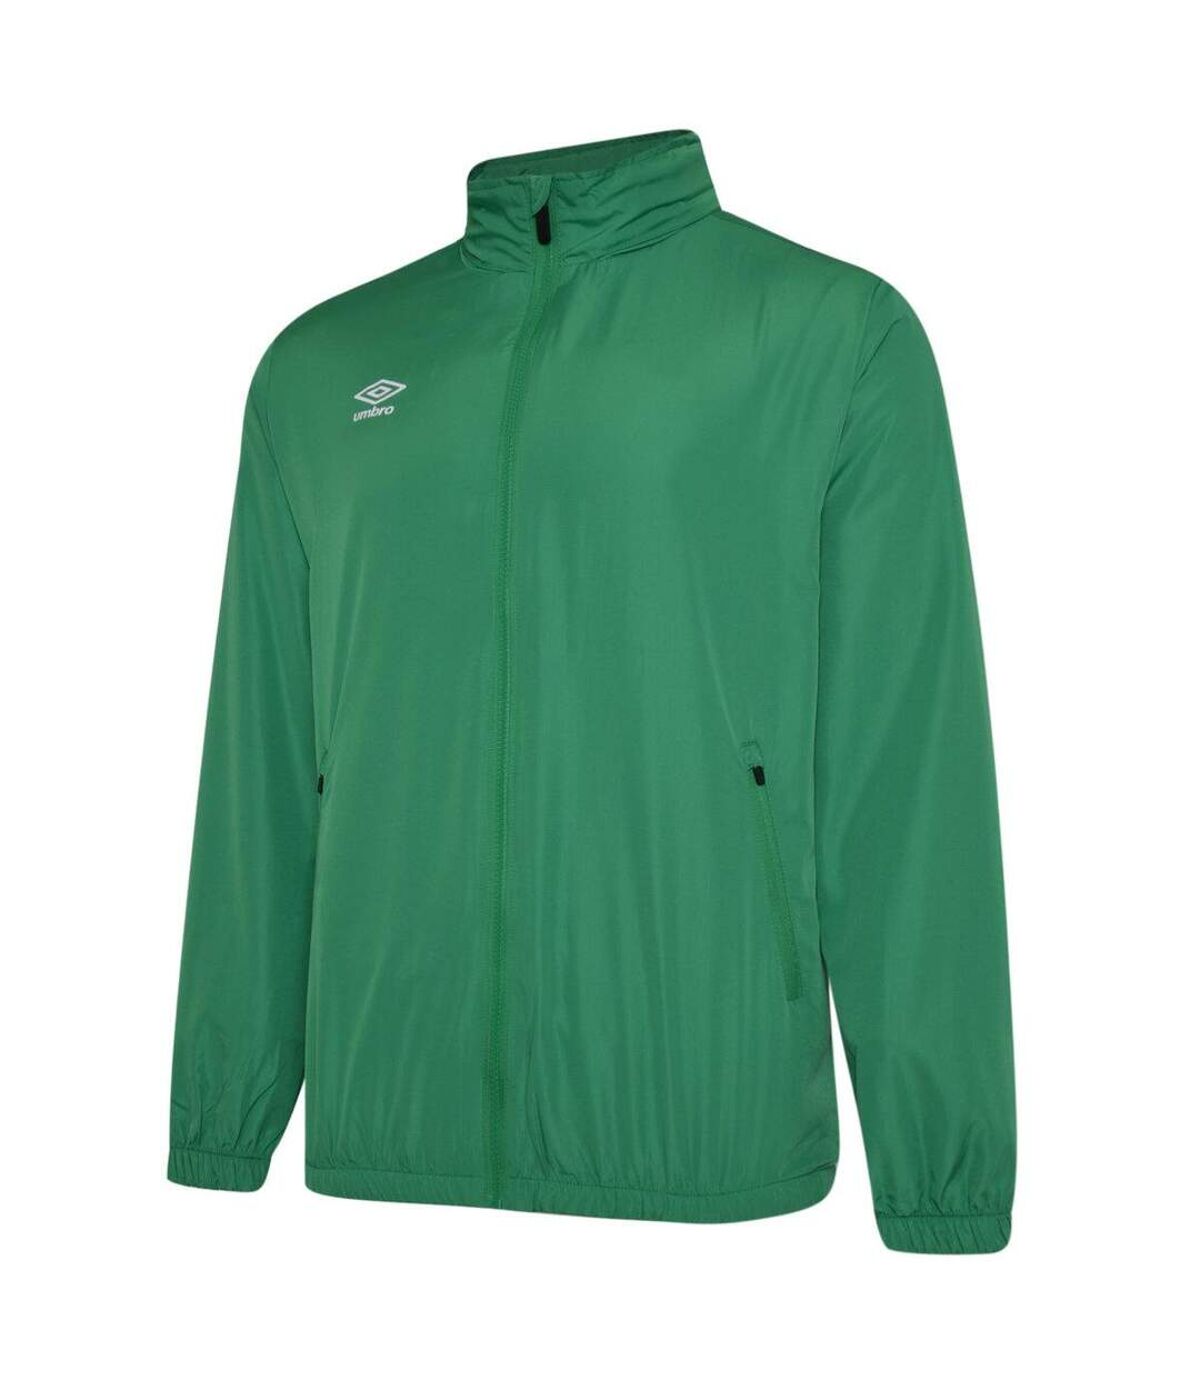 Umbro Mens Club Essential Light Waterproof Jacket (Emerald)